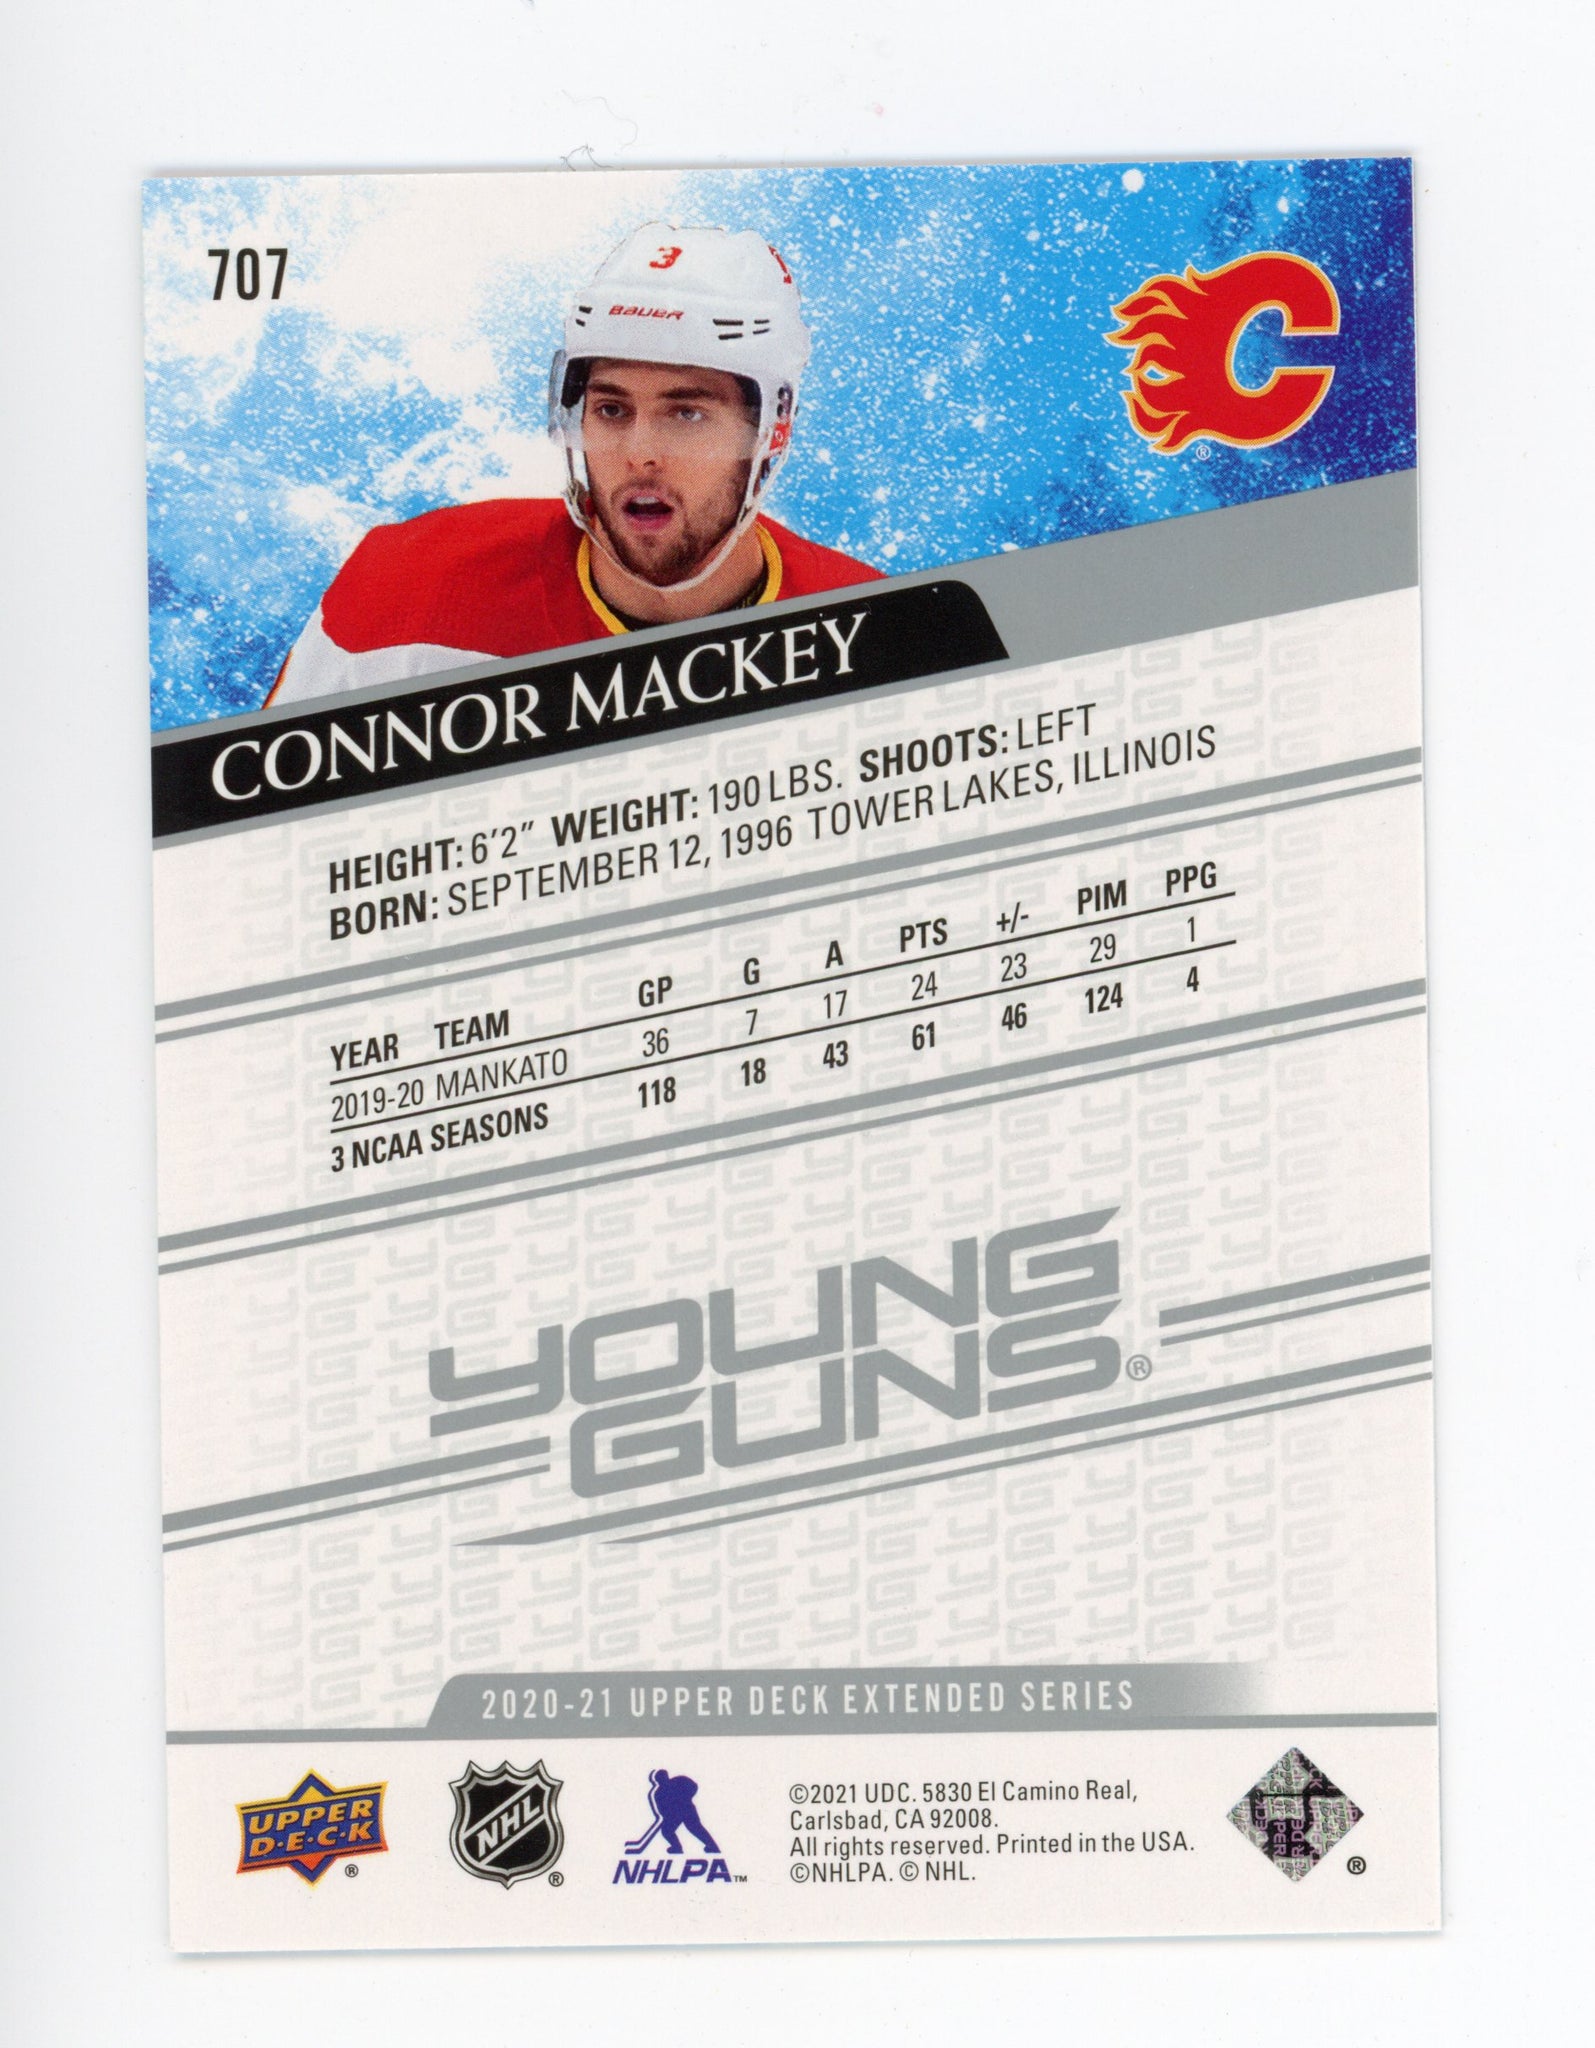 2020-2021 Connor Mackey Young Guns Upper Deck Calgary Flames # 707